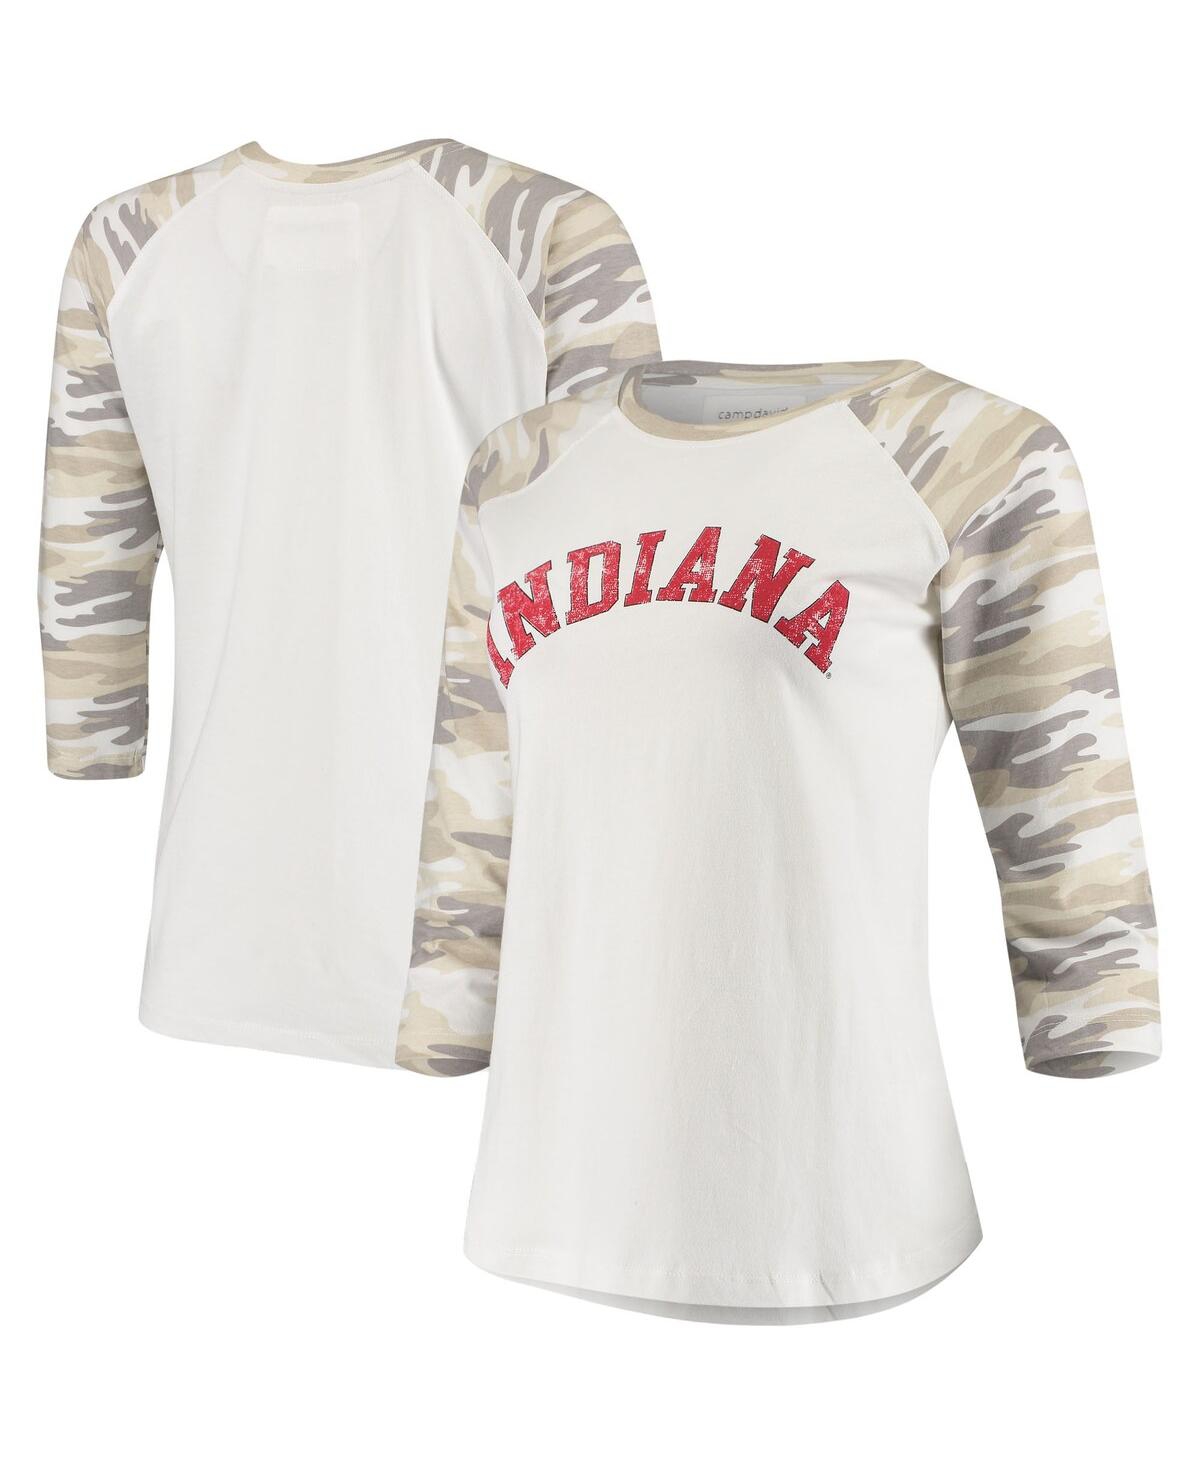 Women's White and Camo Indiana Hoosiers Boyfriend Baseball Raglan 3/4 Sleeve T-shirt - White, Camo